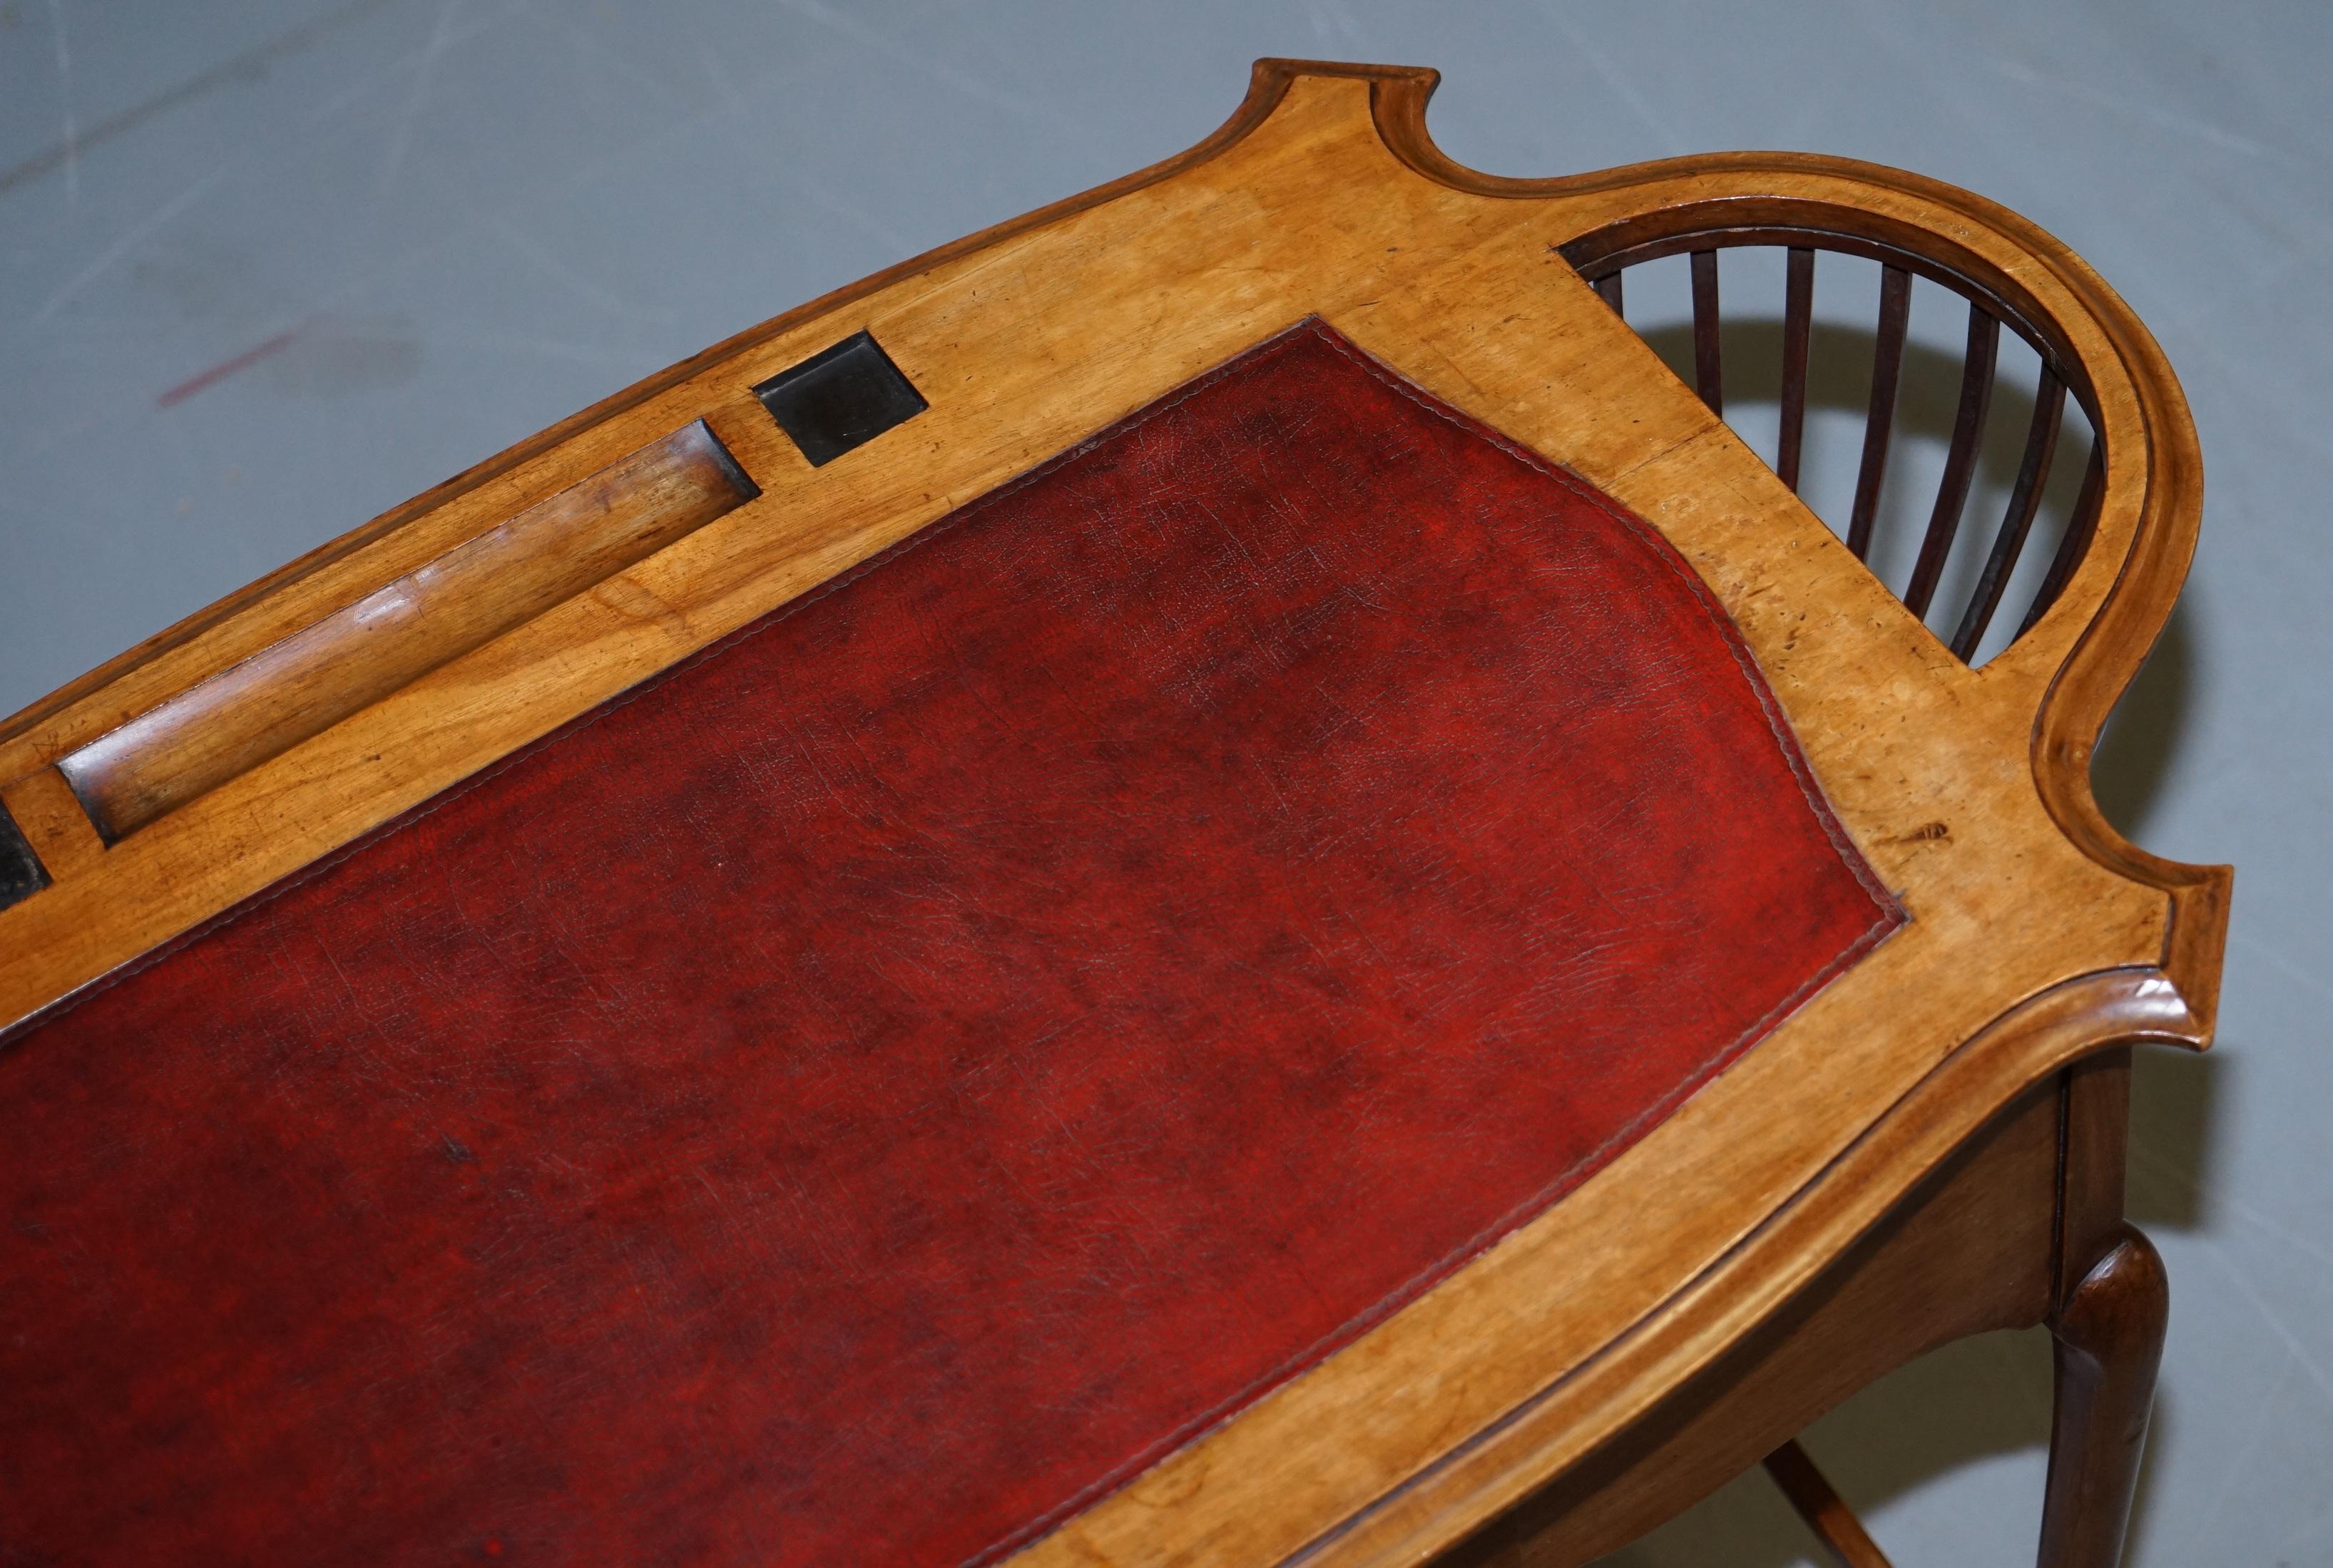 Leather Rare Victorian circa 1860 Small Mahogany Desk Built in Jardinières for Plants